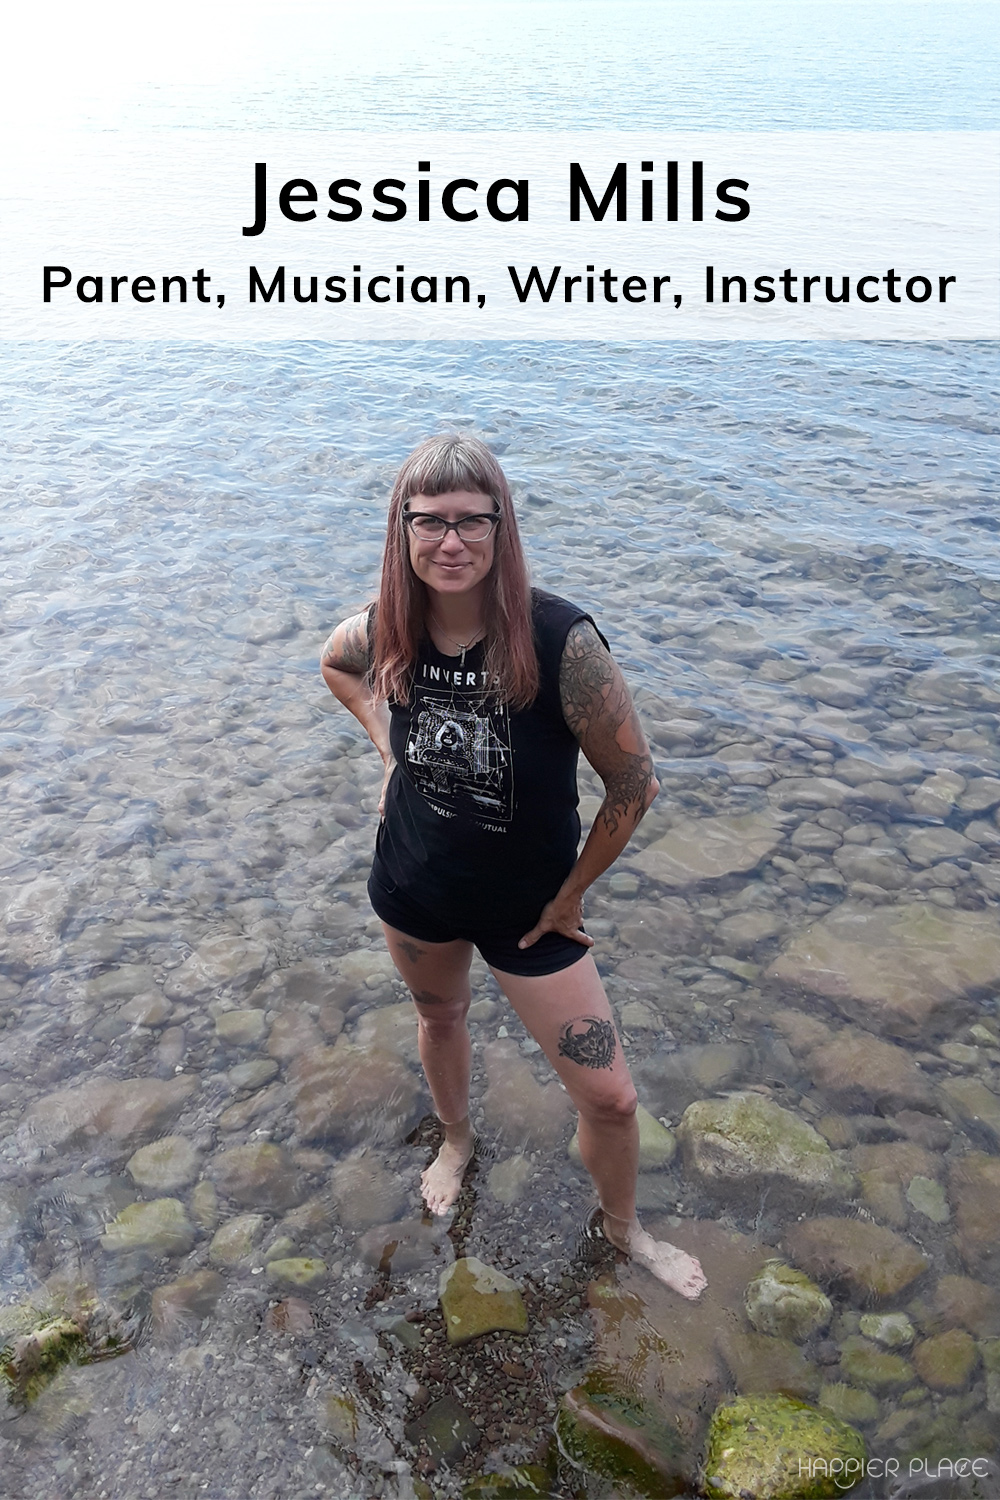 Jessica Mills: Parent, Musician, Writer, Instructor (Albuquerque, New Mexico) at Lake Ontario